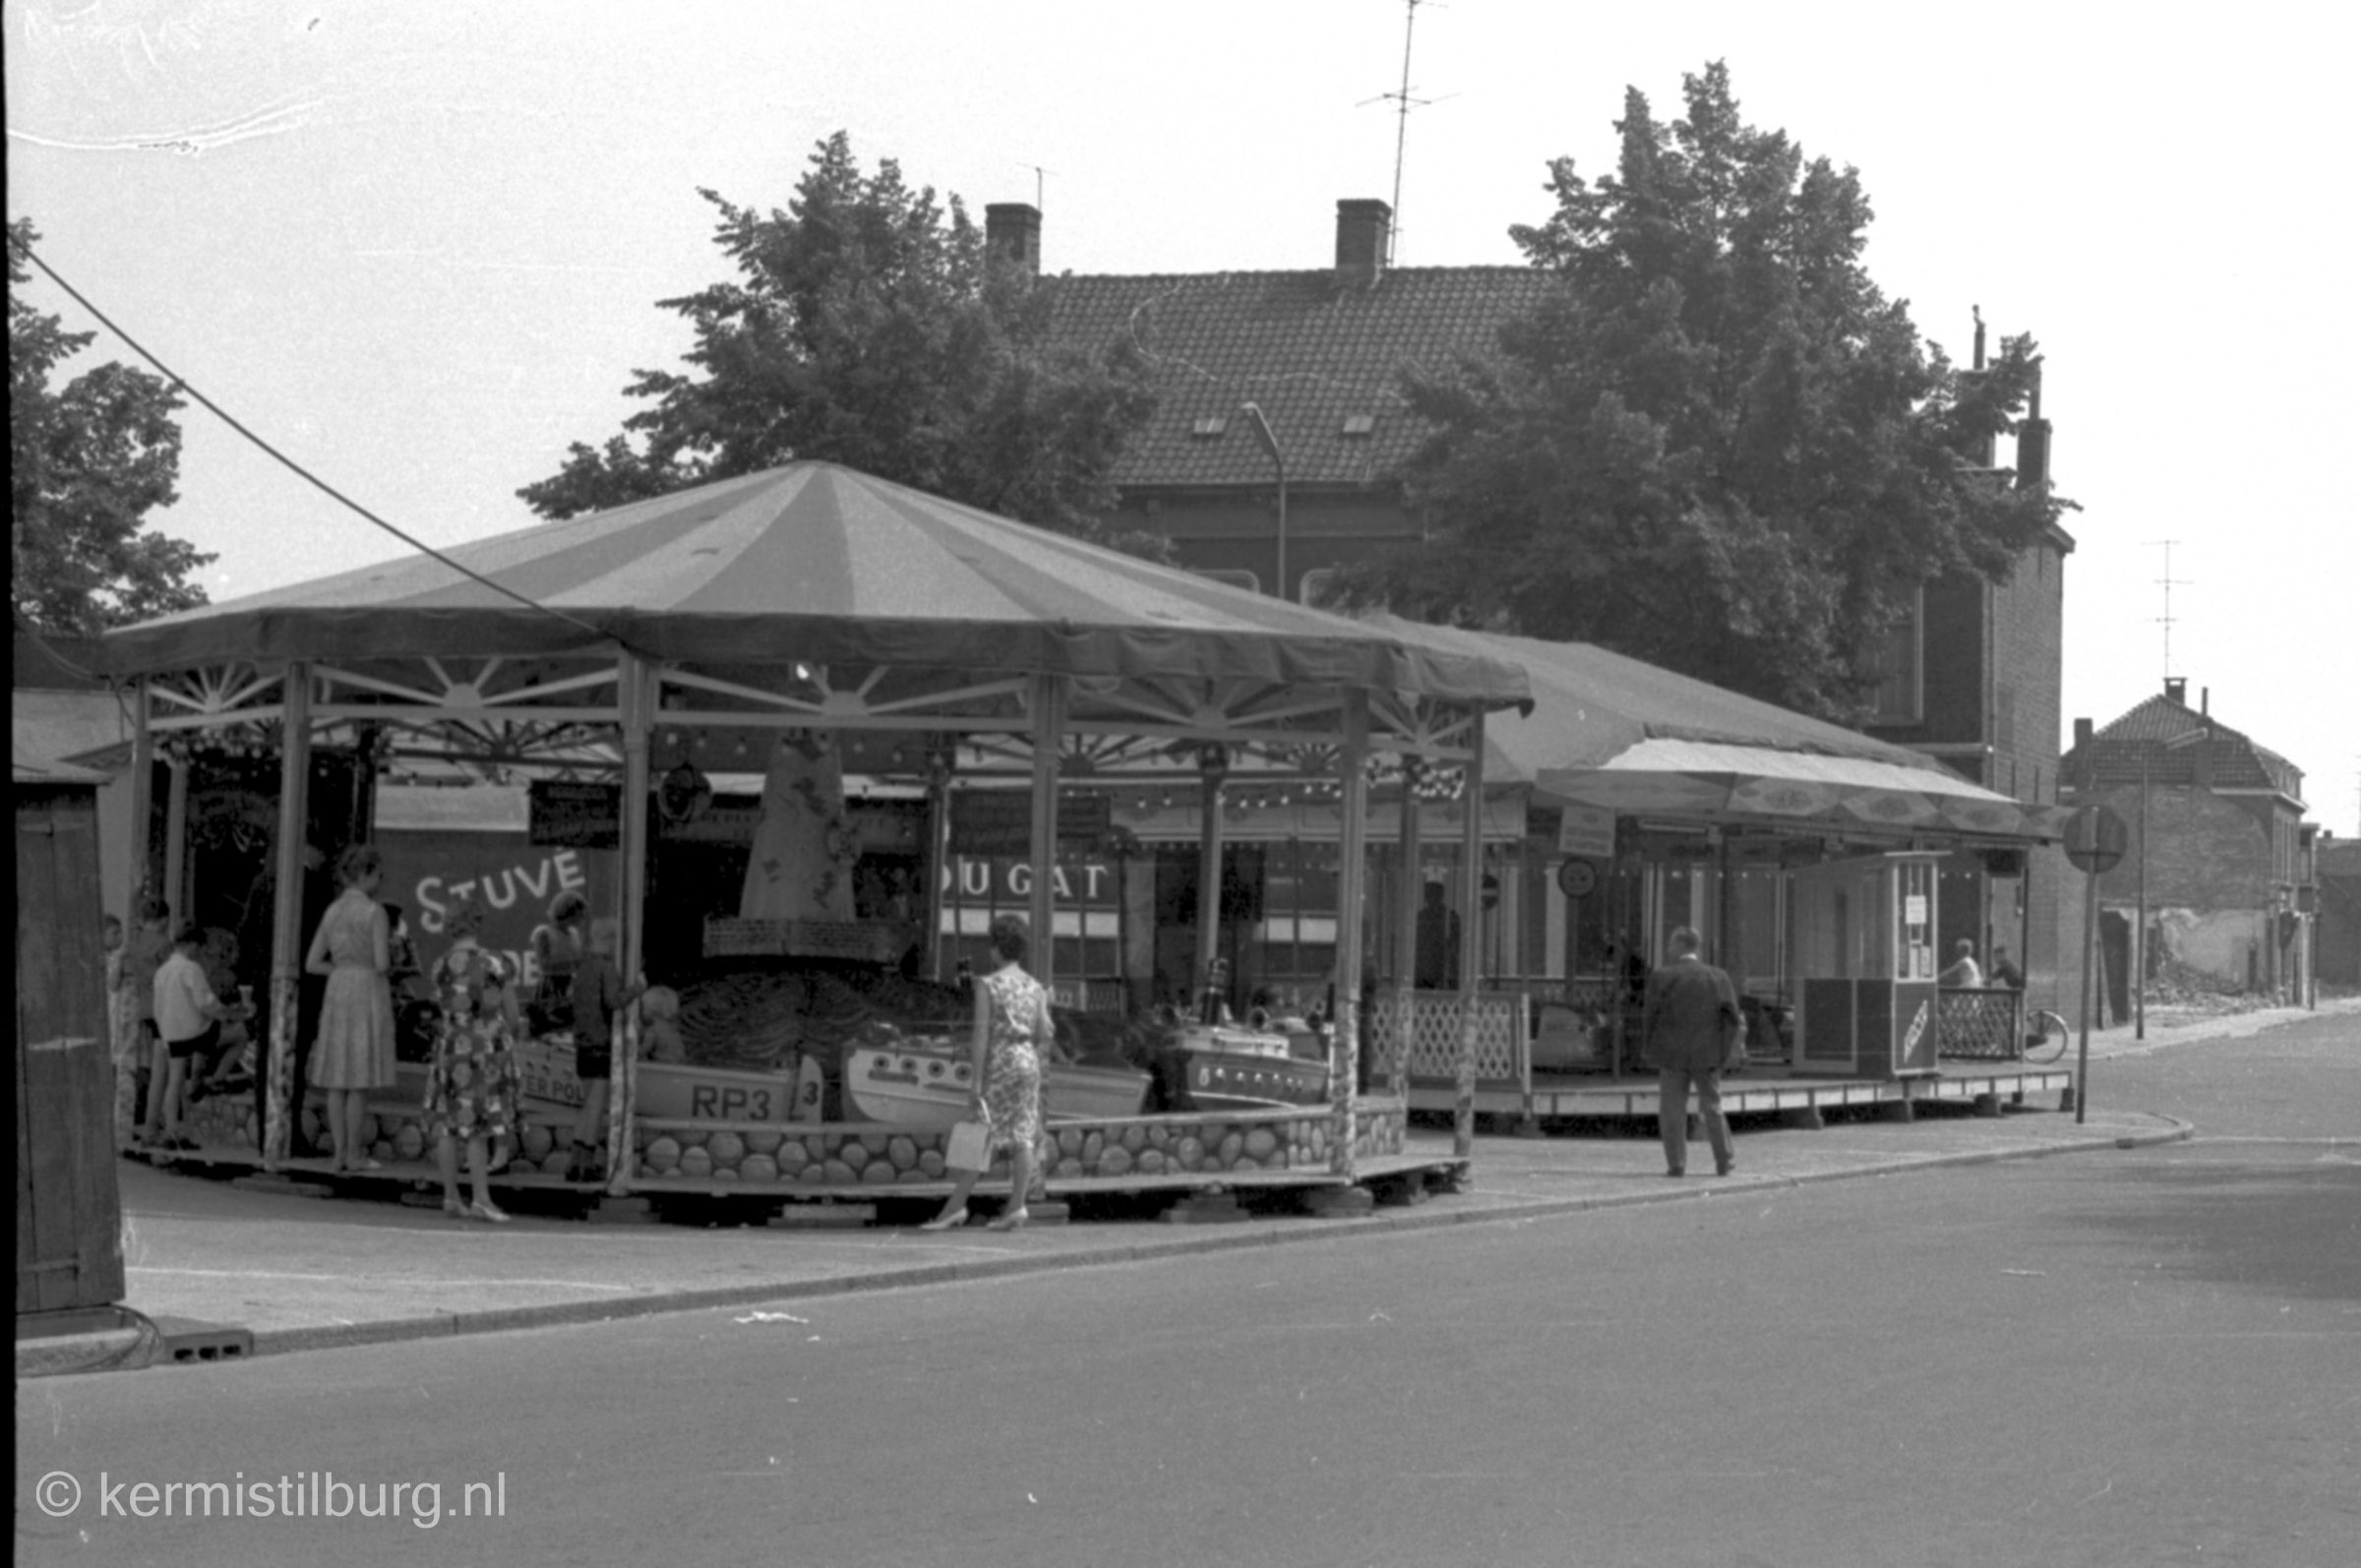 1964, Kermis, Tilburg, Tilburgse kermis